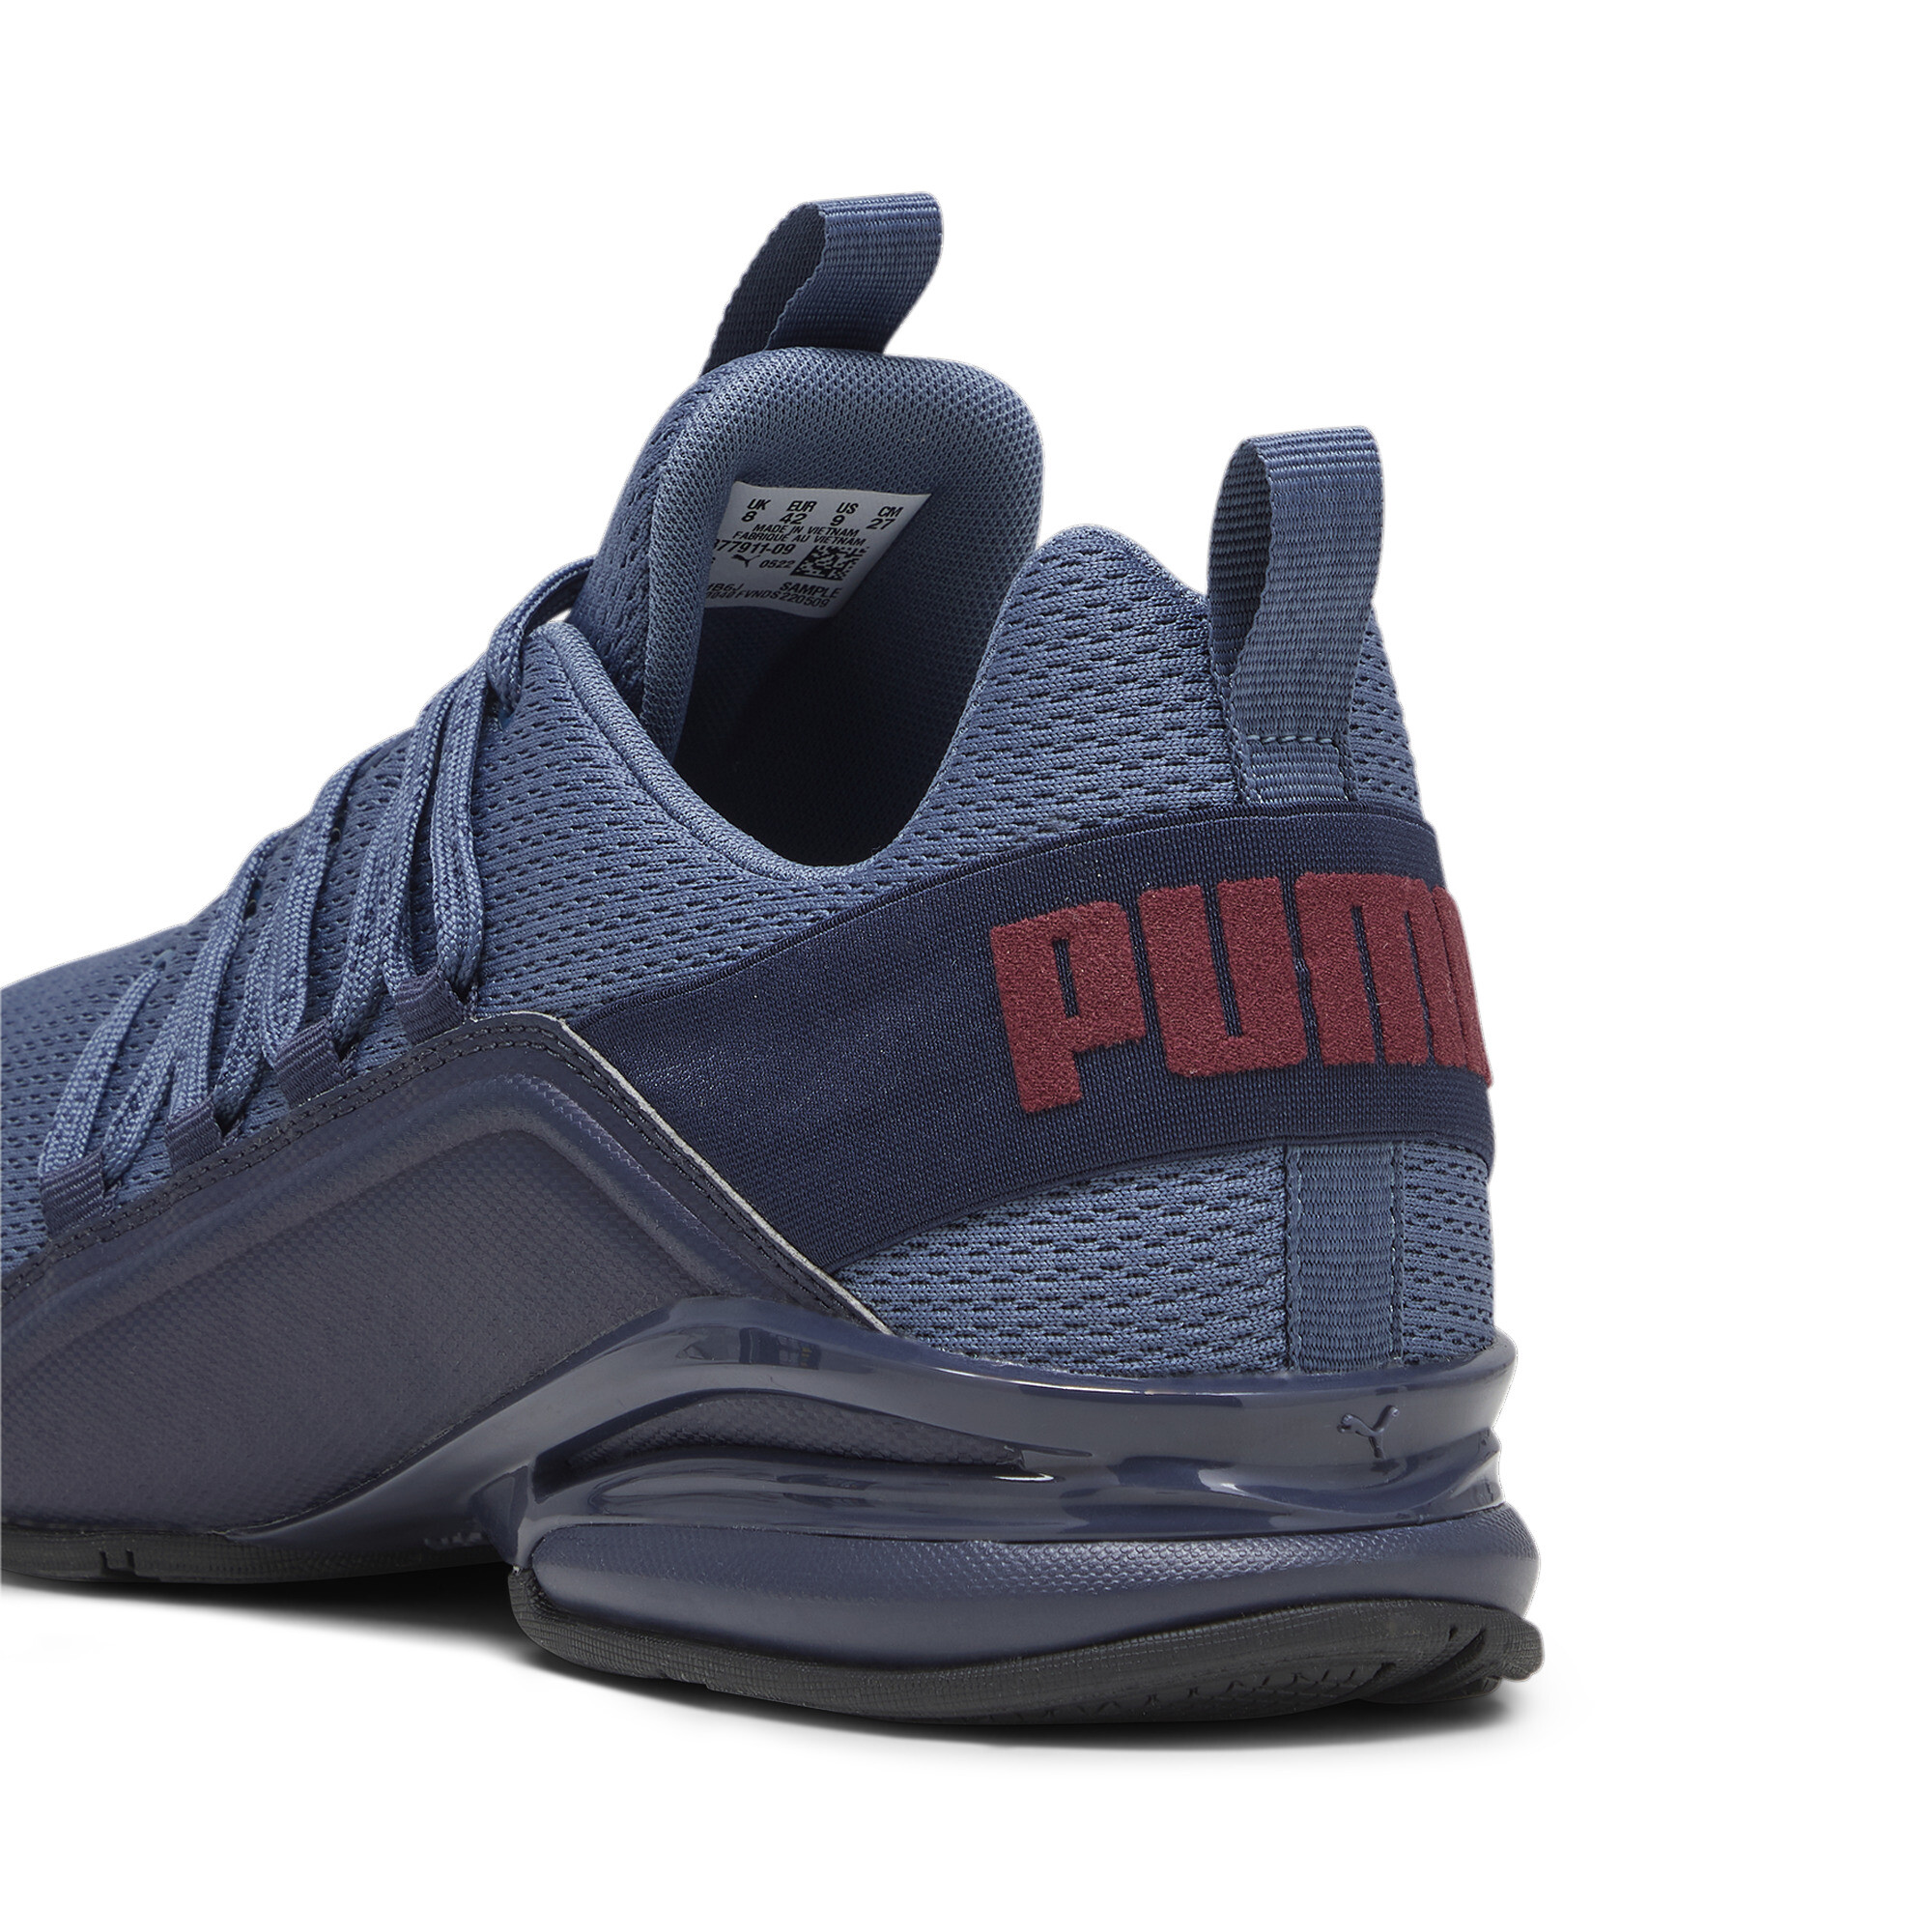 Men's Puma Axelion Refresh Running Shoes, Blue, Size 39, Shoes